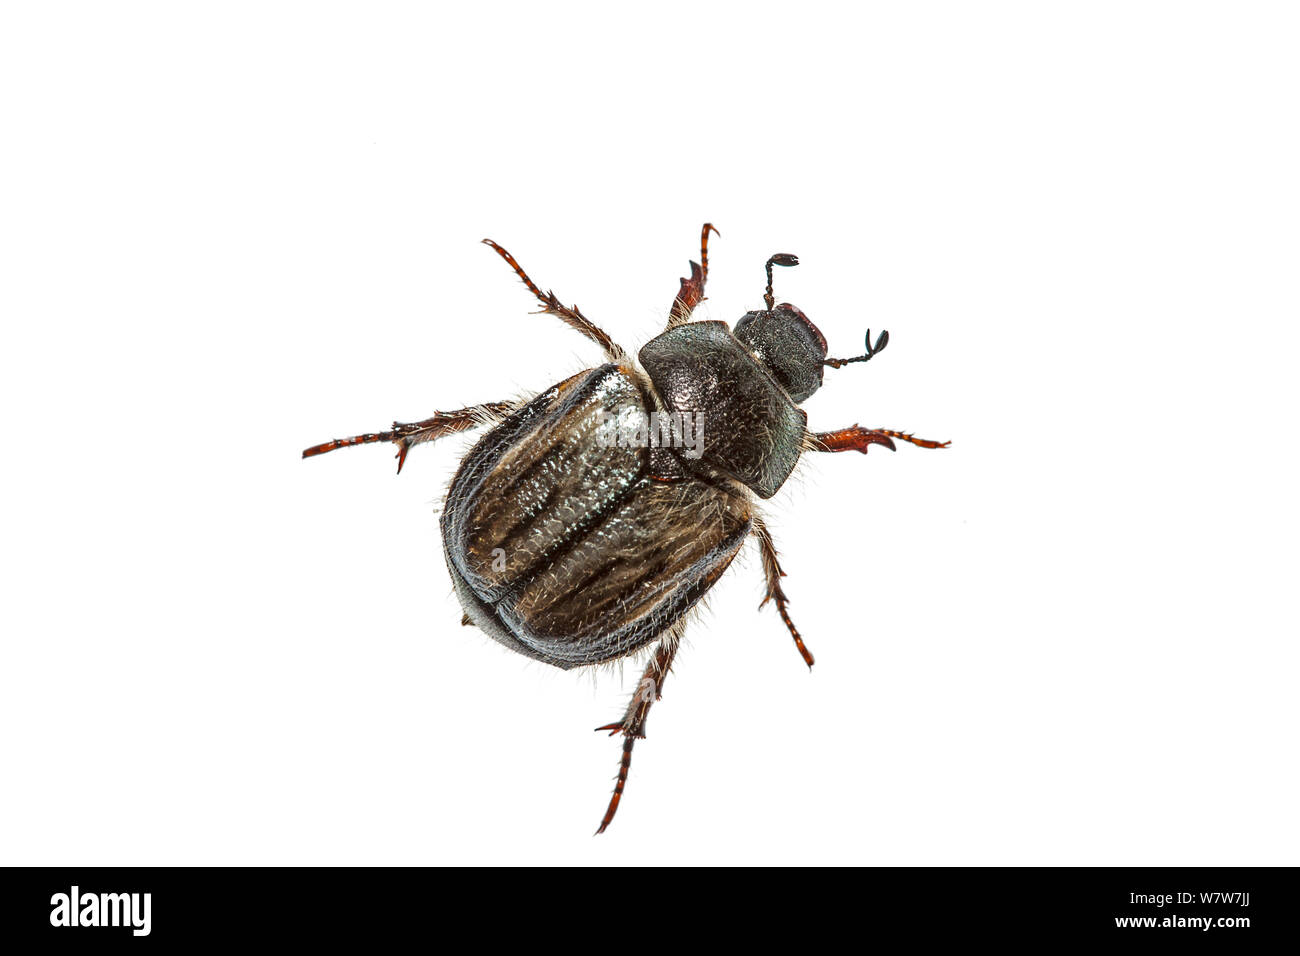 Beetle (Coleoptera) Crete, Greece. Meetyourneighbours.net project. Stock Photo